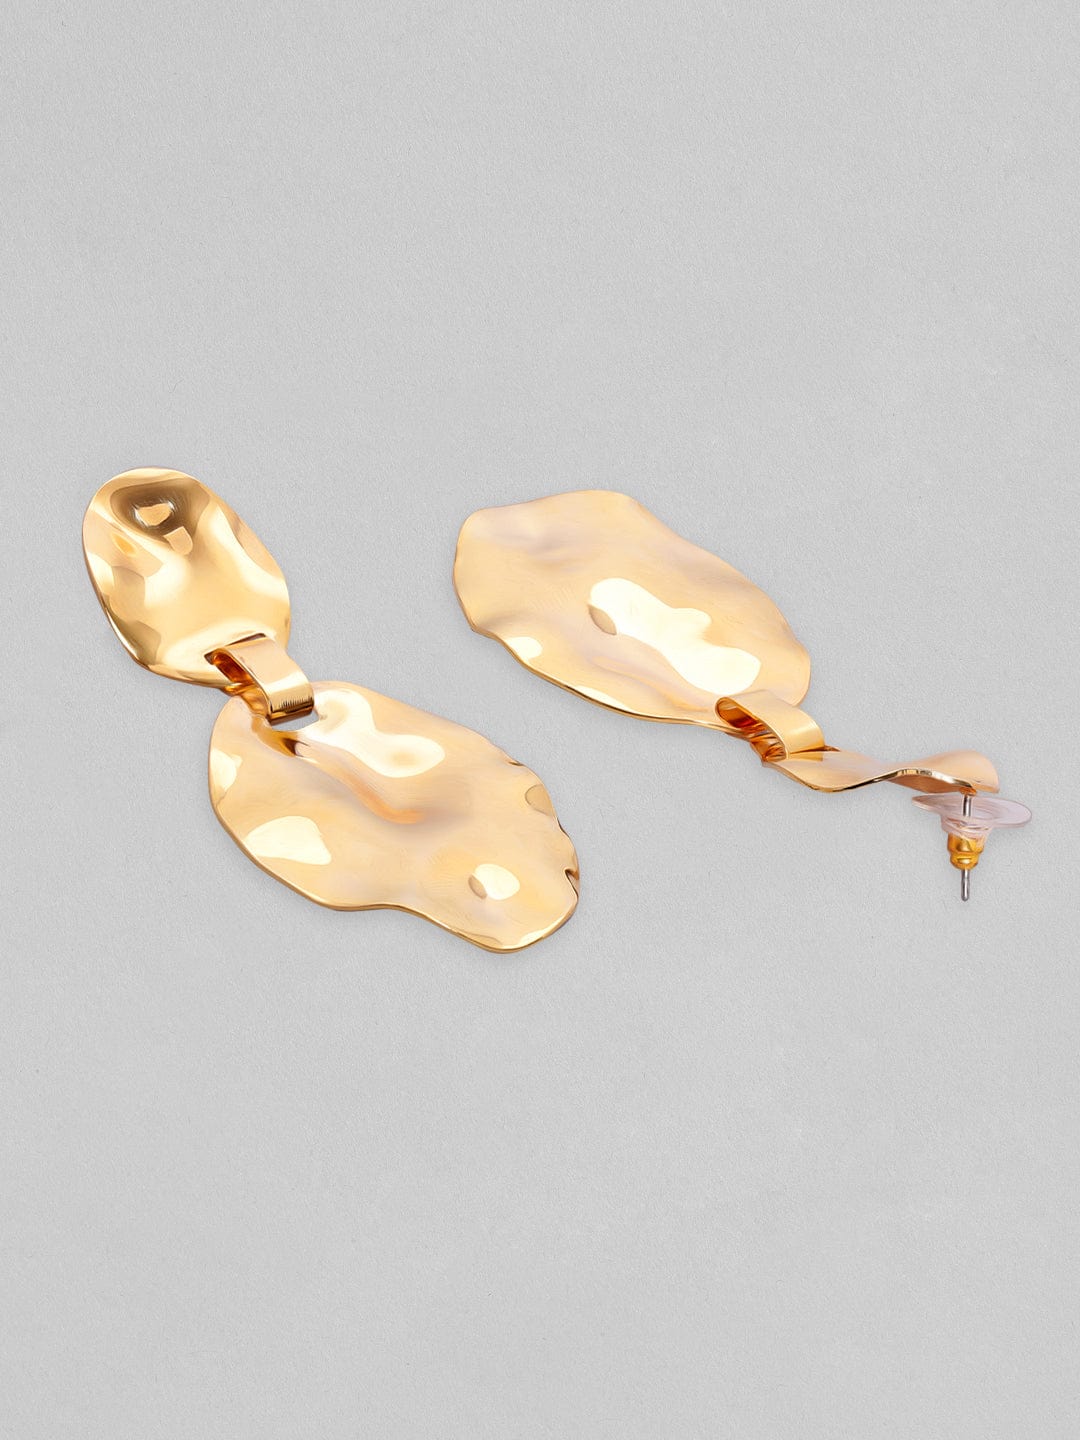 Rubans Voguish 18K Gold-Plated Geometric Drop Earrings Earrings